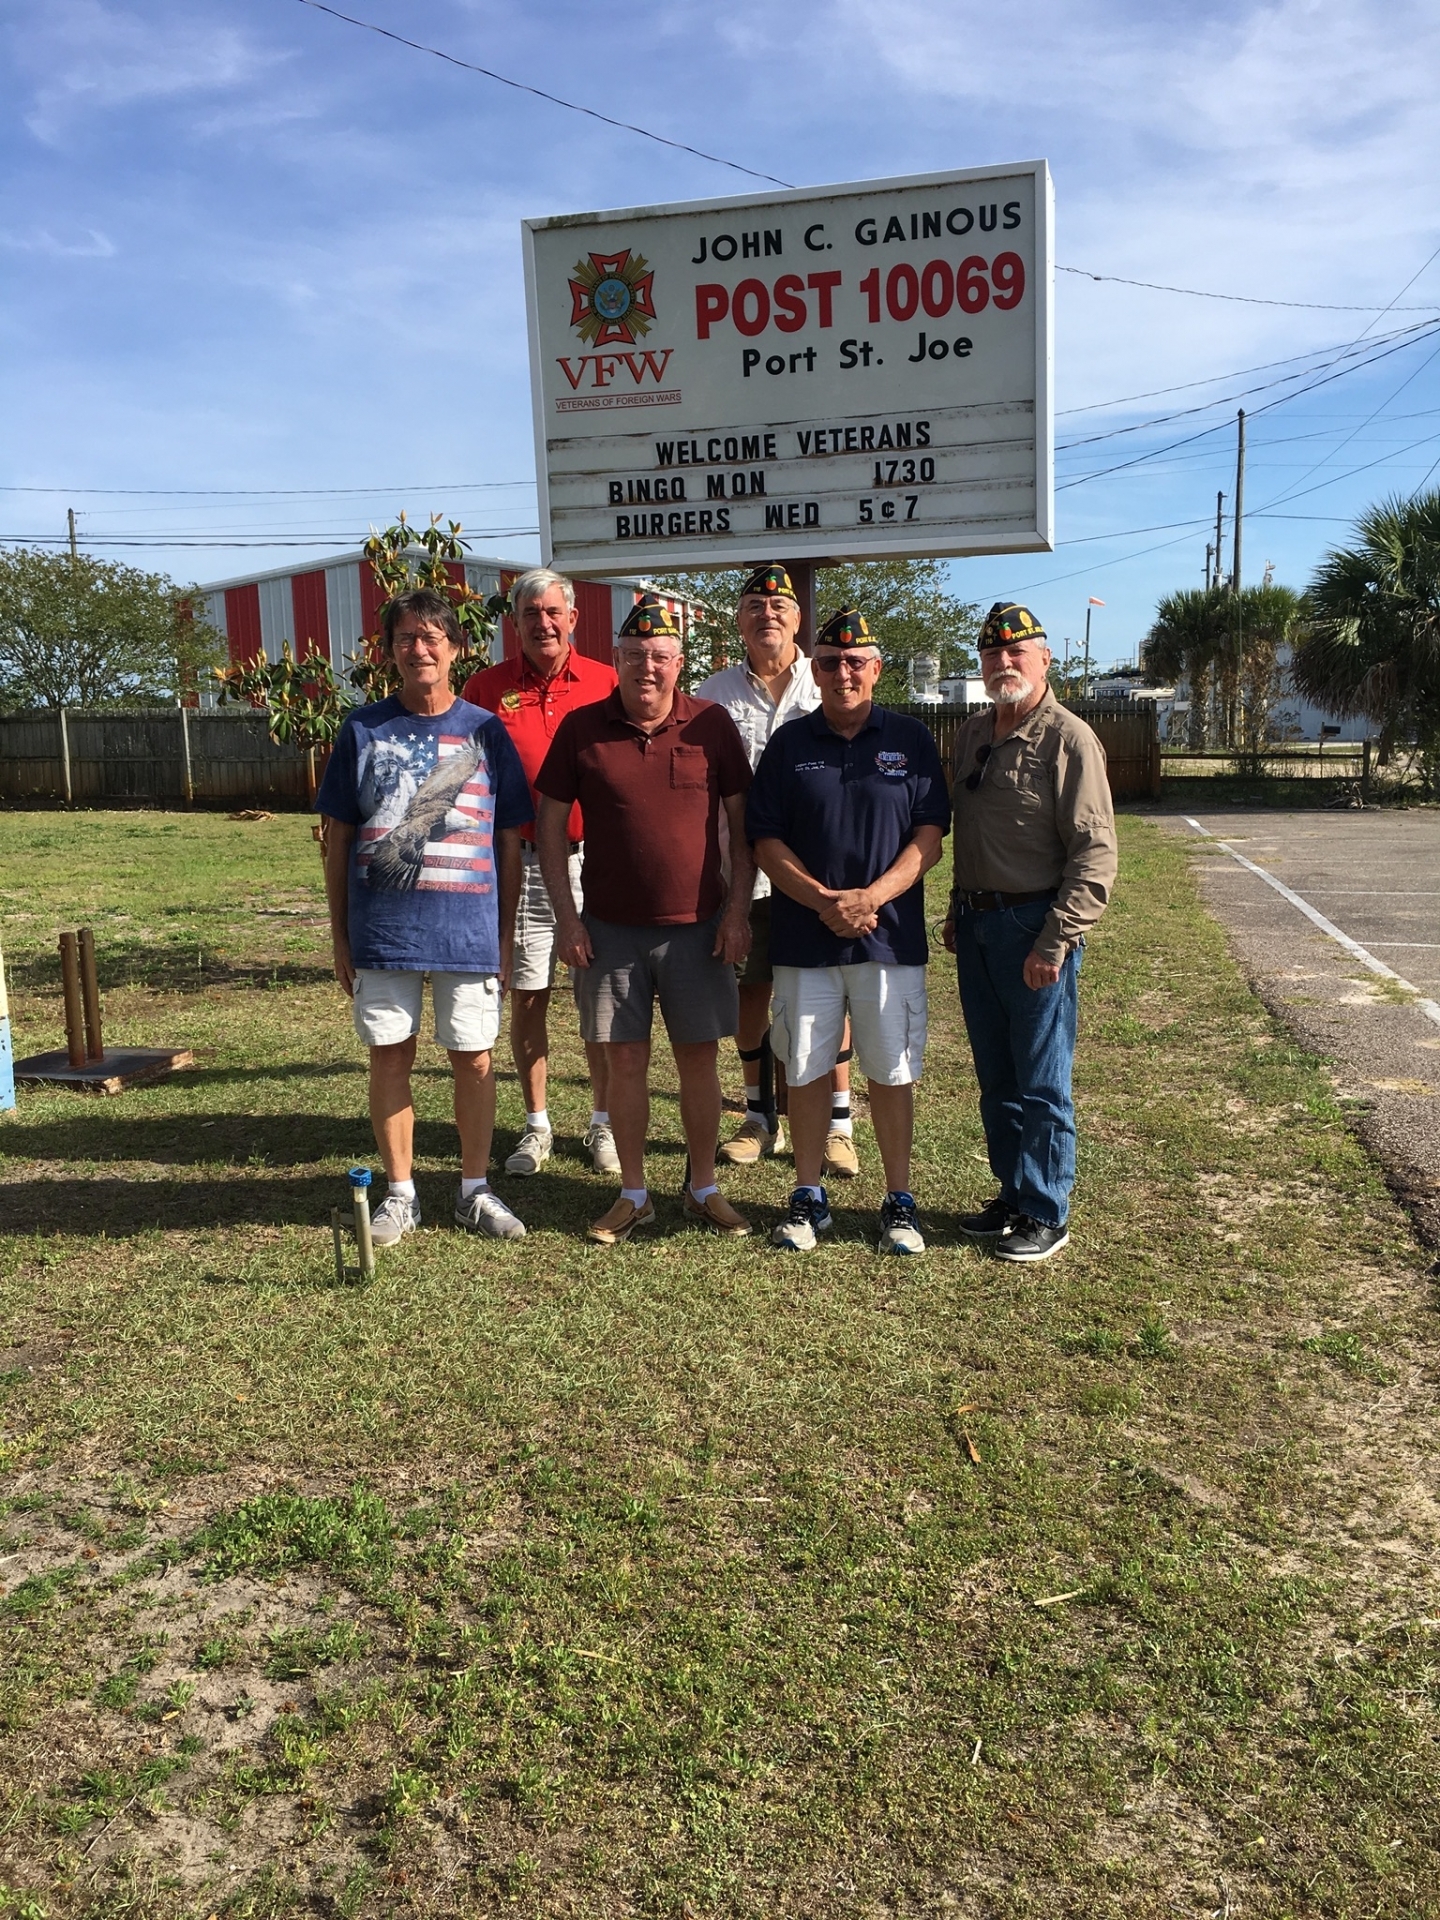 Post 116 Port St. Joe, Florida